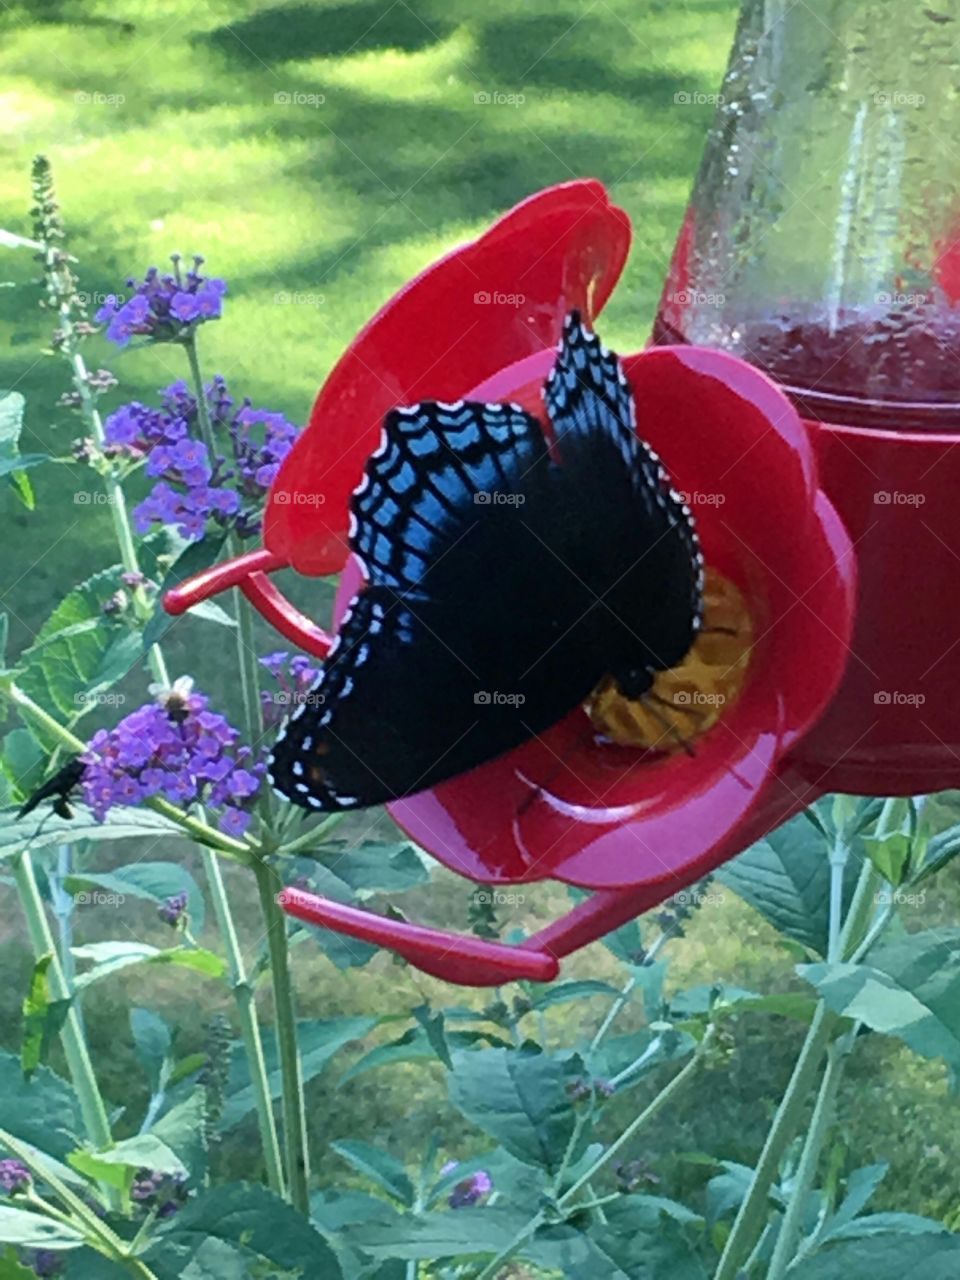 Butterfly in red hummingbird feeder, in garden.